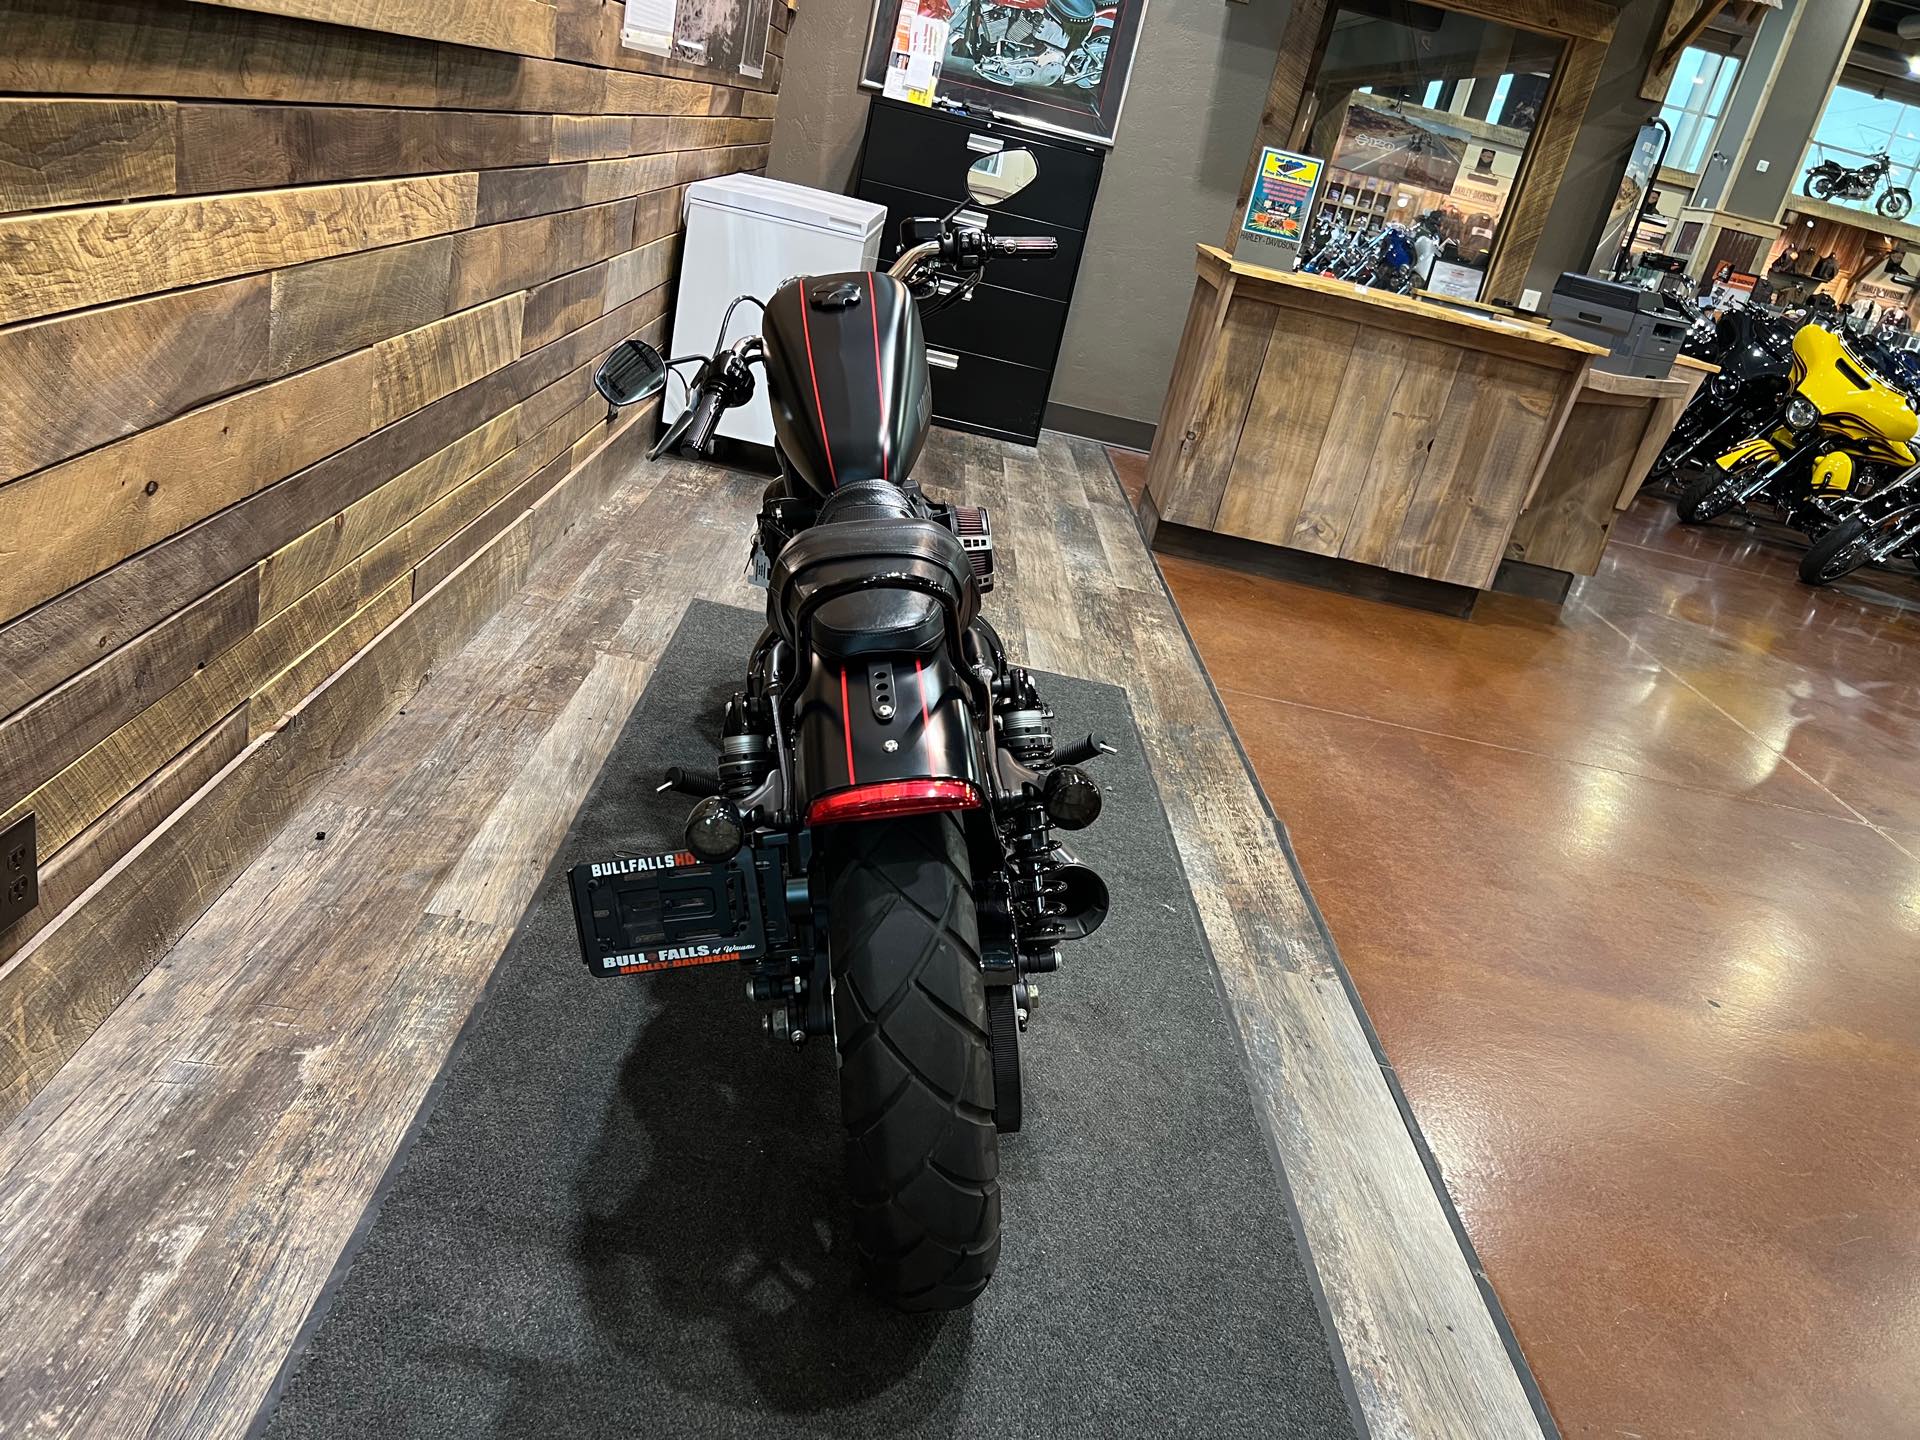 2017 Harley-Davidson Sportster Roadster at Bull Falls Harley-Davidson